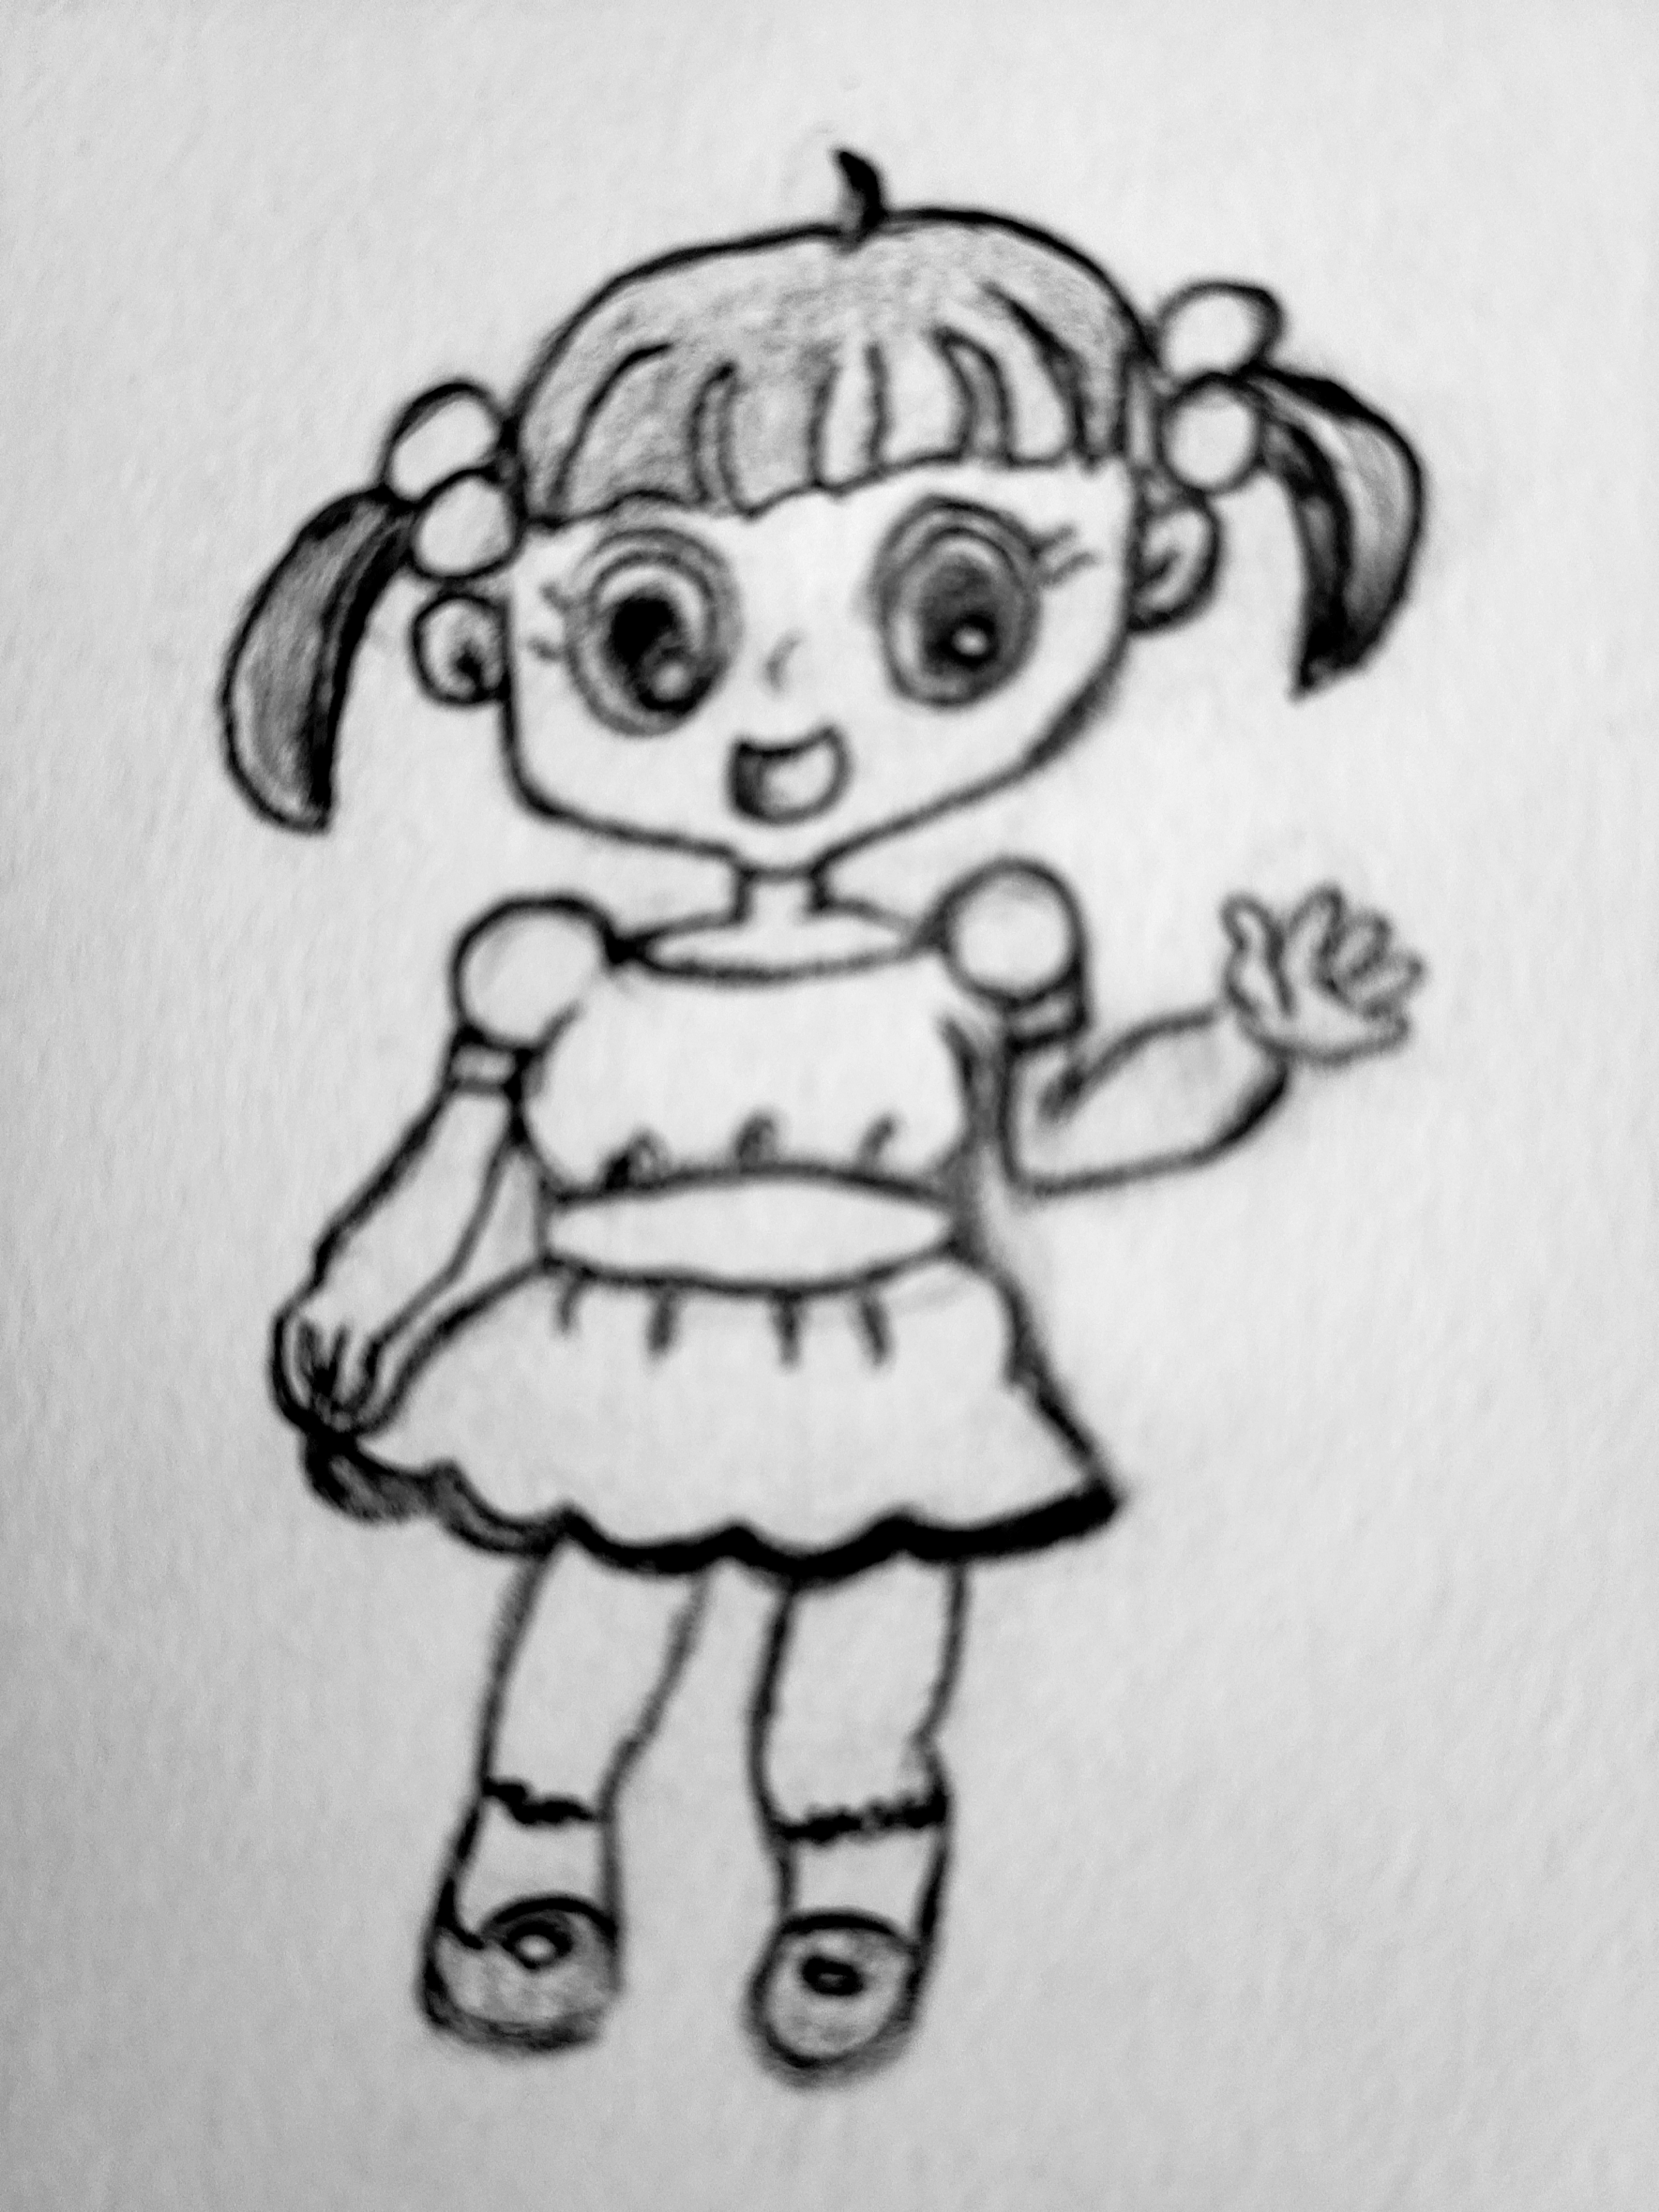 Pencil drawing of cartoon character by me : r/Pencildrawing